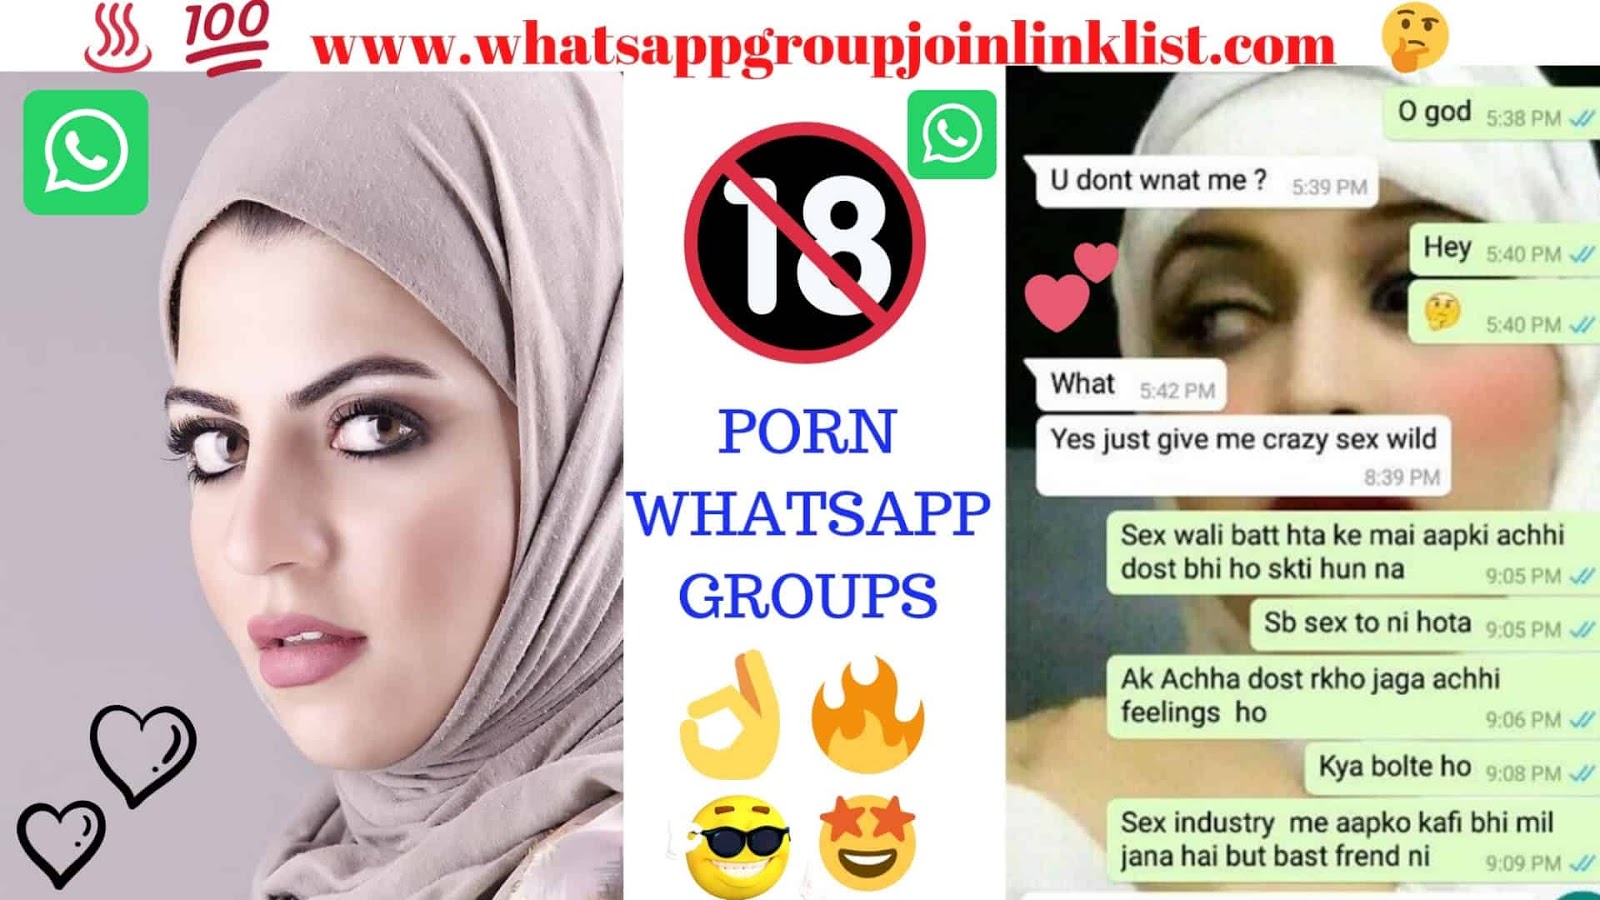 Whatsappsex - Whatsapp sex group. Whatsapp Pics. 2019-10-04